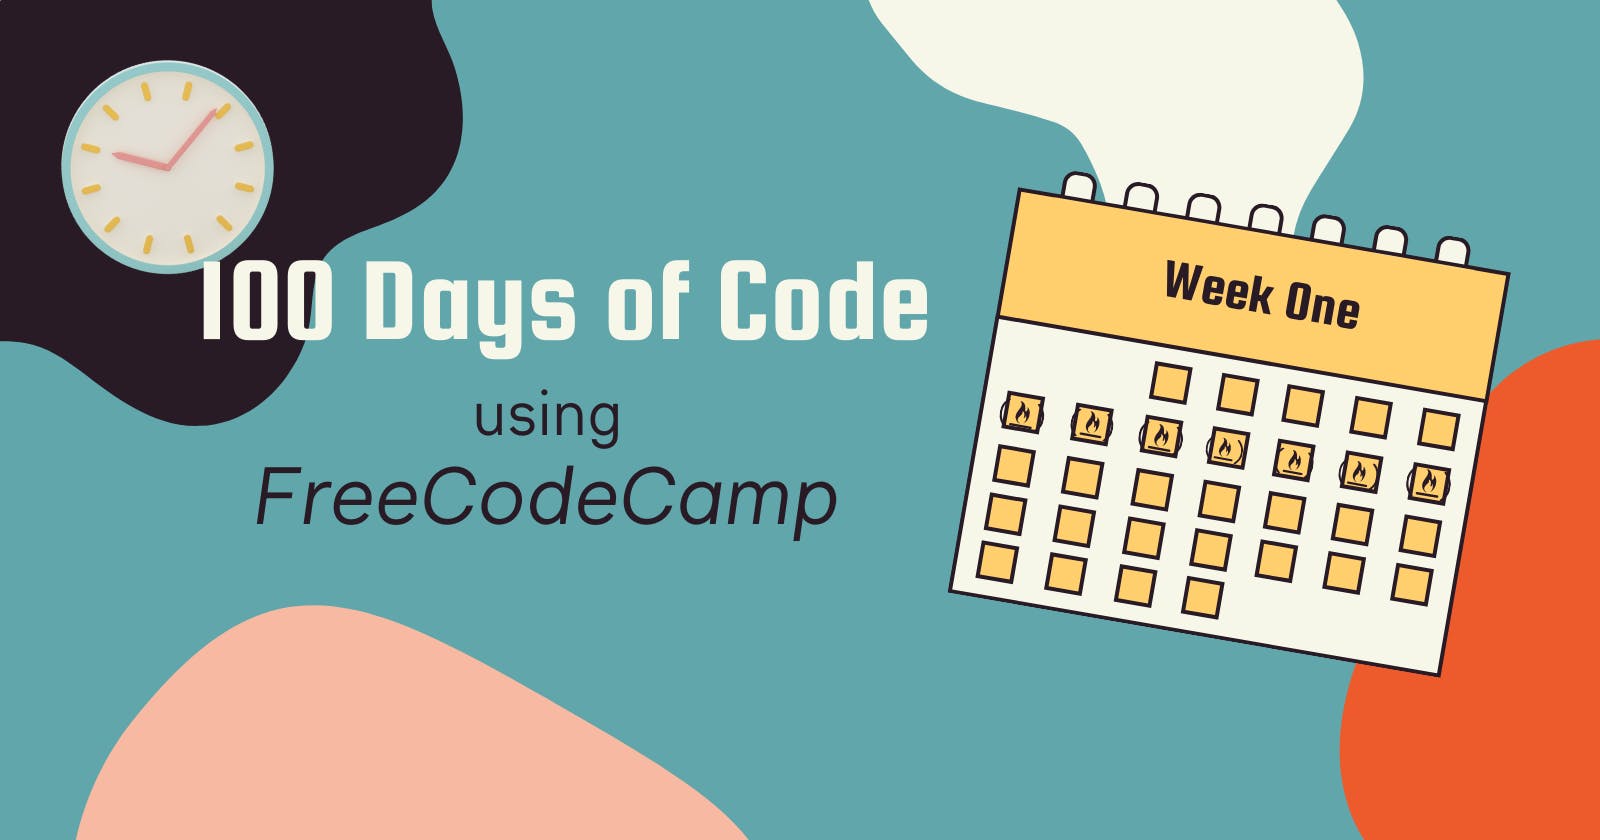 100DaysOfCode using FreeCodeCamp - Week 1